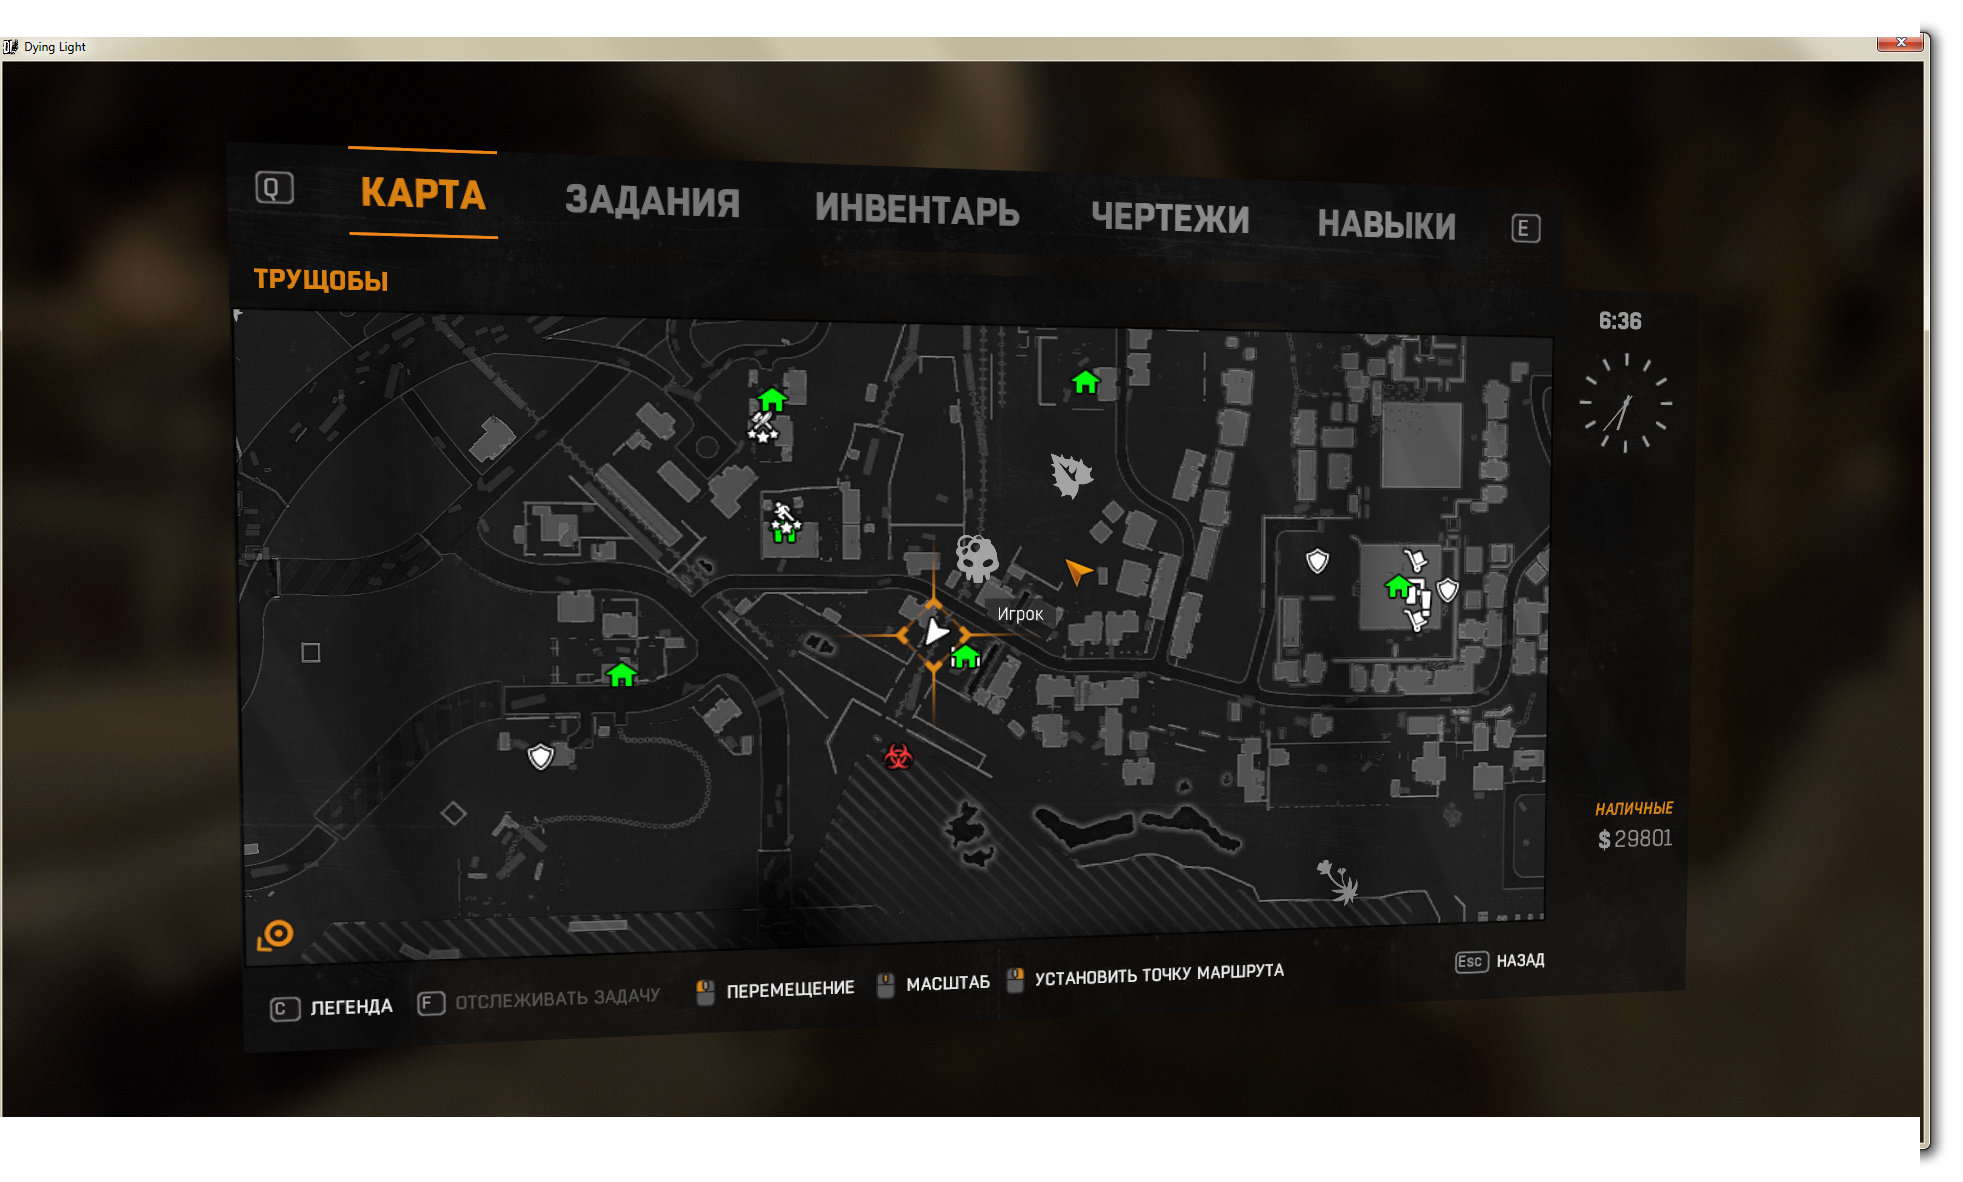 Дай лайт на русском. Dying Light 2 карта. Dying Light лаборатория Камдена. Лаборатория Камдена Dying Light на карте. Локация даинг Лайт 2.